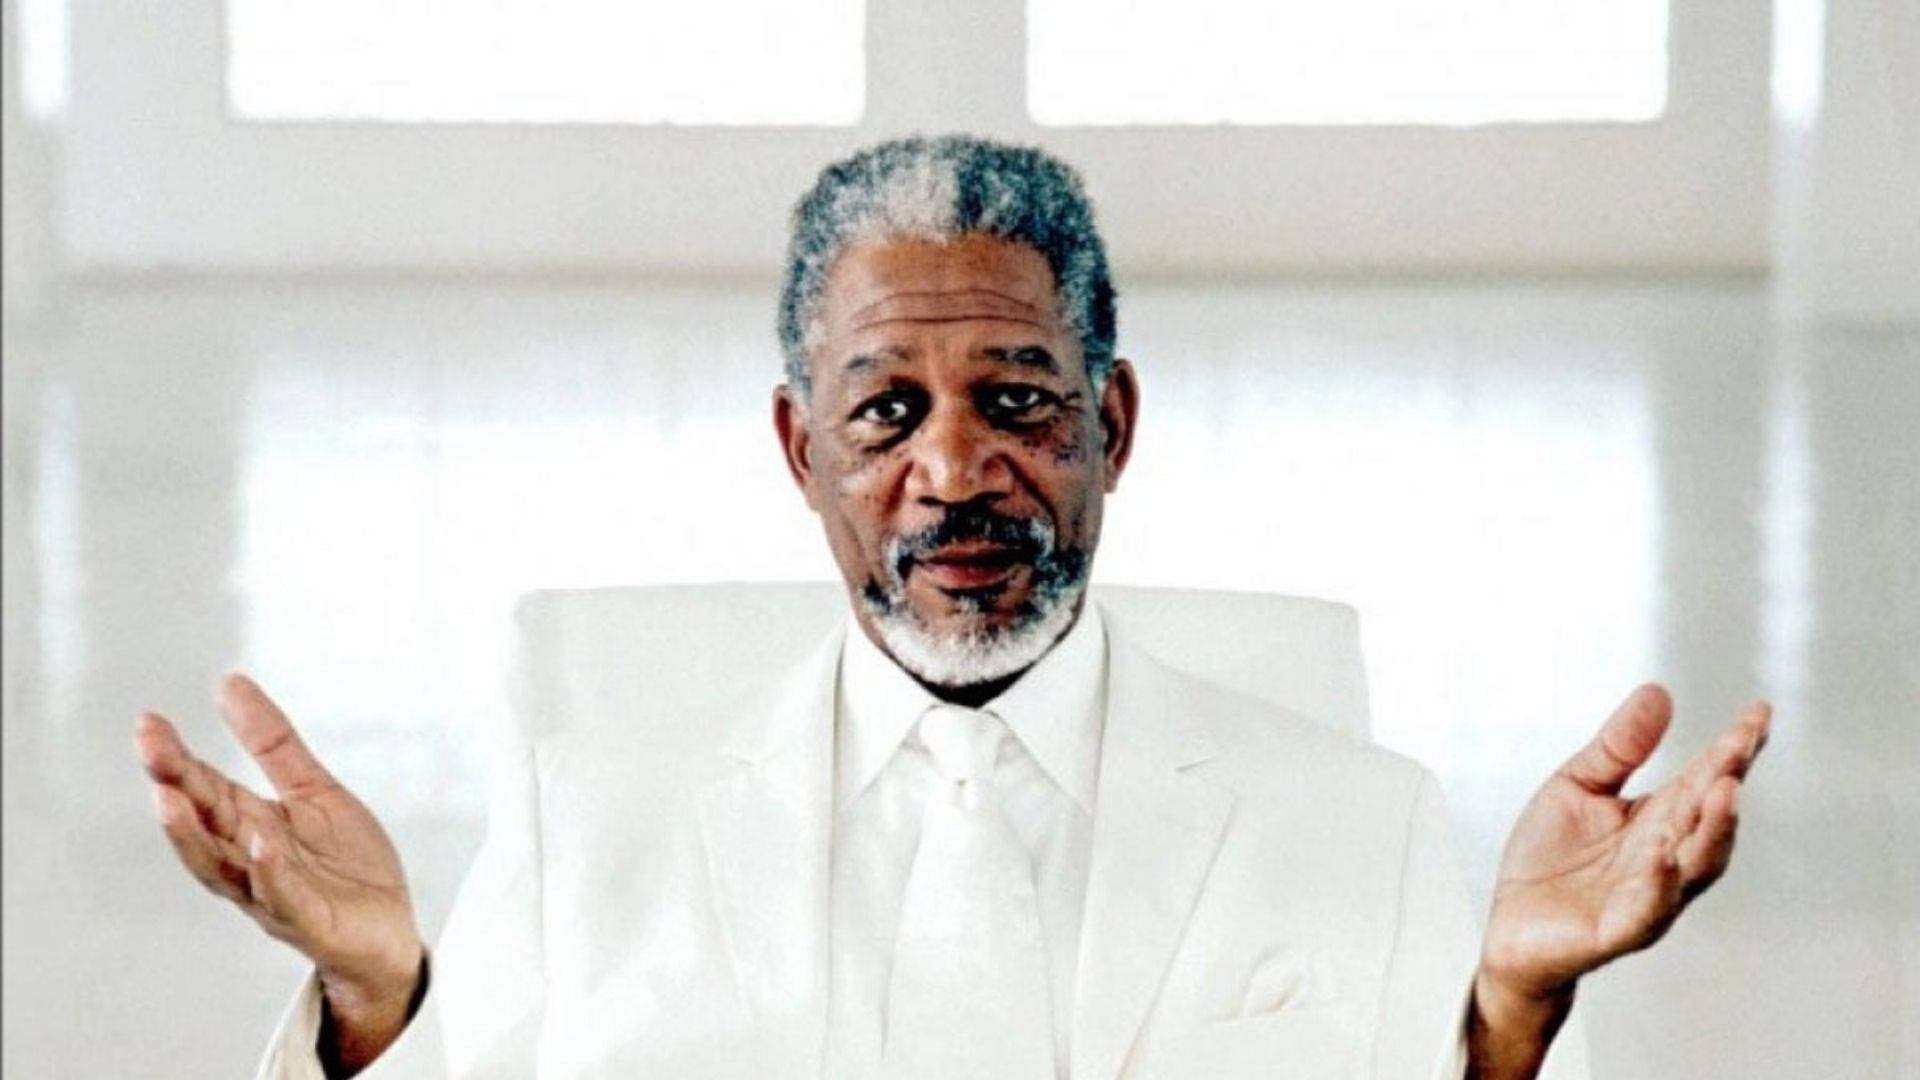 Morgan Freeman In White Suit